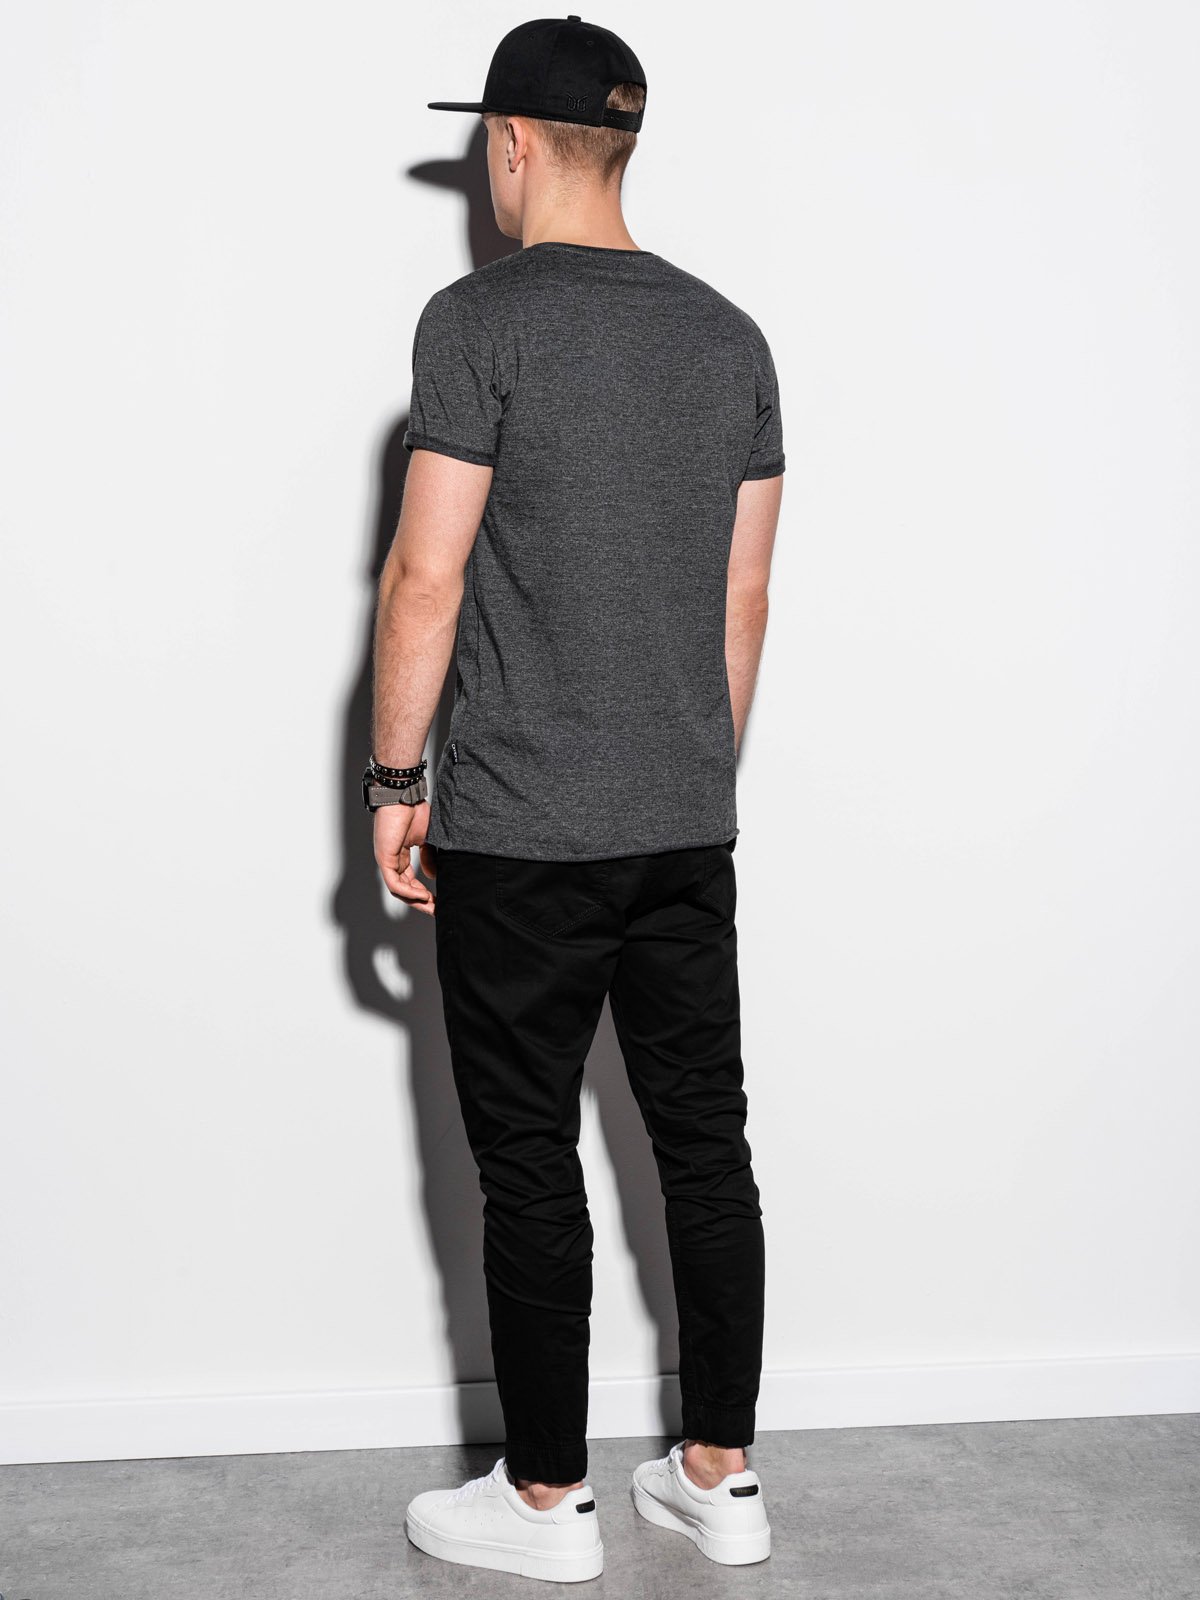 Men's plain t-shirt - dark grey S1217 | MODONE wholesale - Clothing For Men